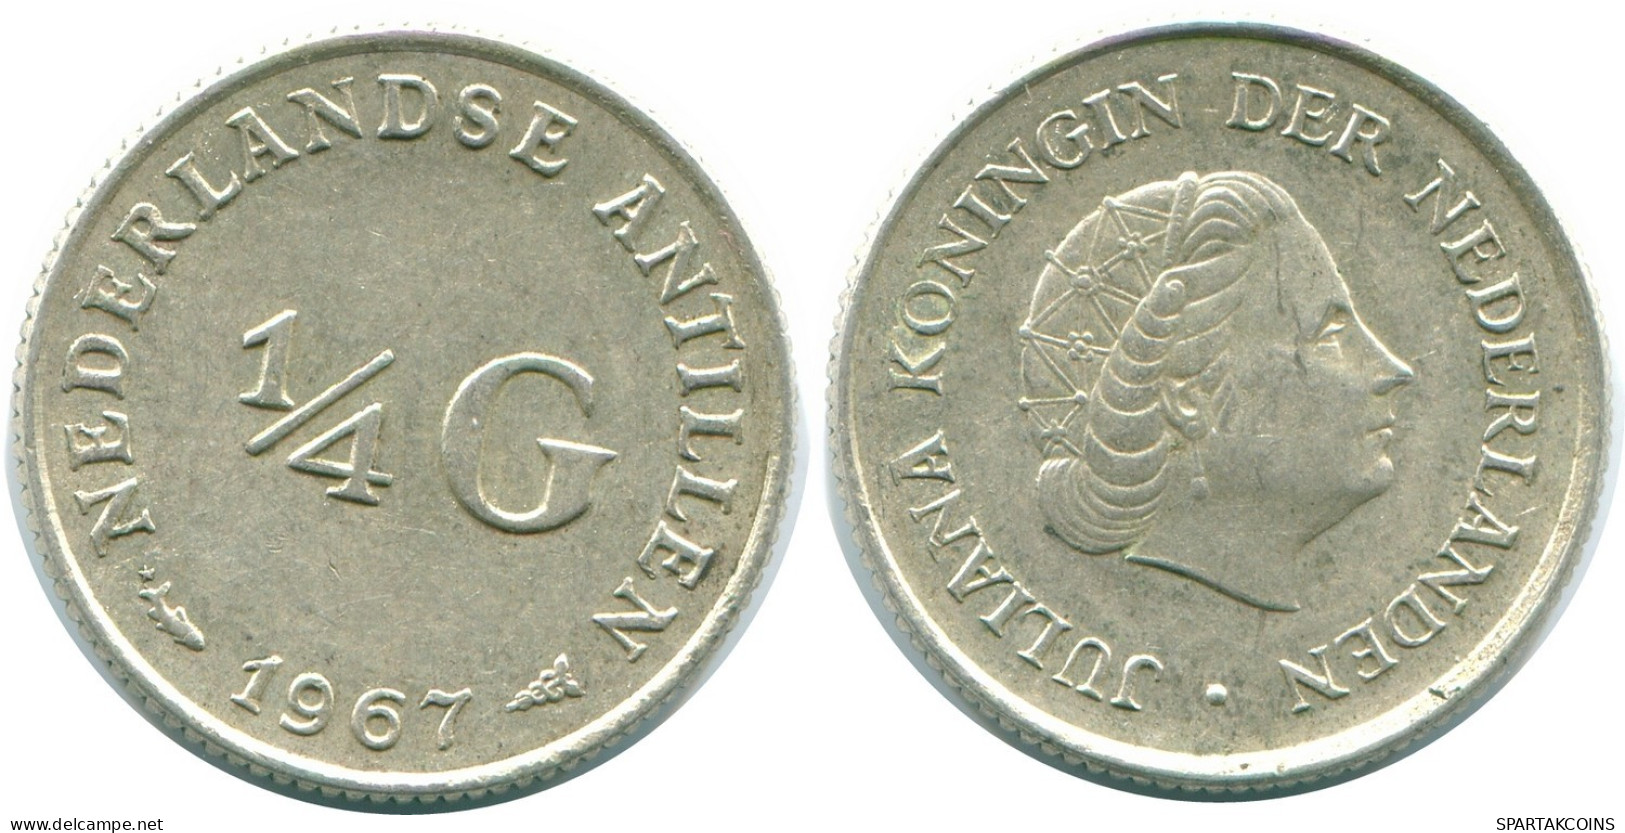 1/4 GULDEN 1967 NETHERLANDS ANTILLES SILVER Colonial Coin #NL11479.4.U.A - Niederländische Antillen